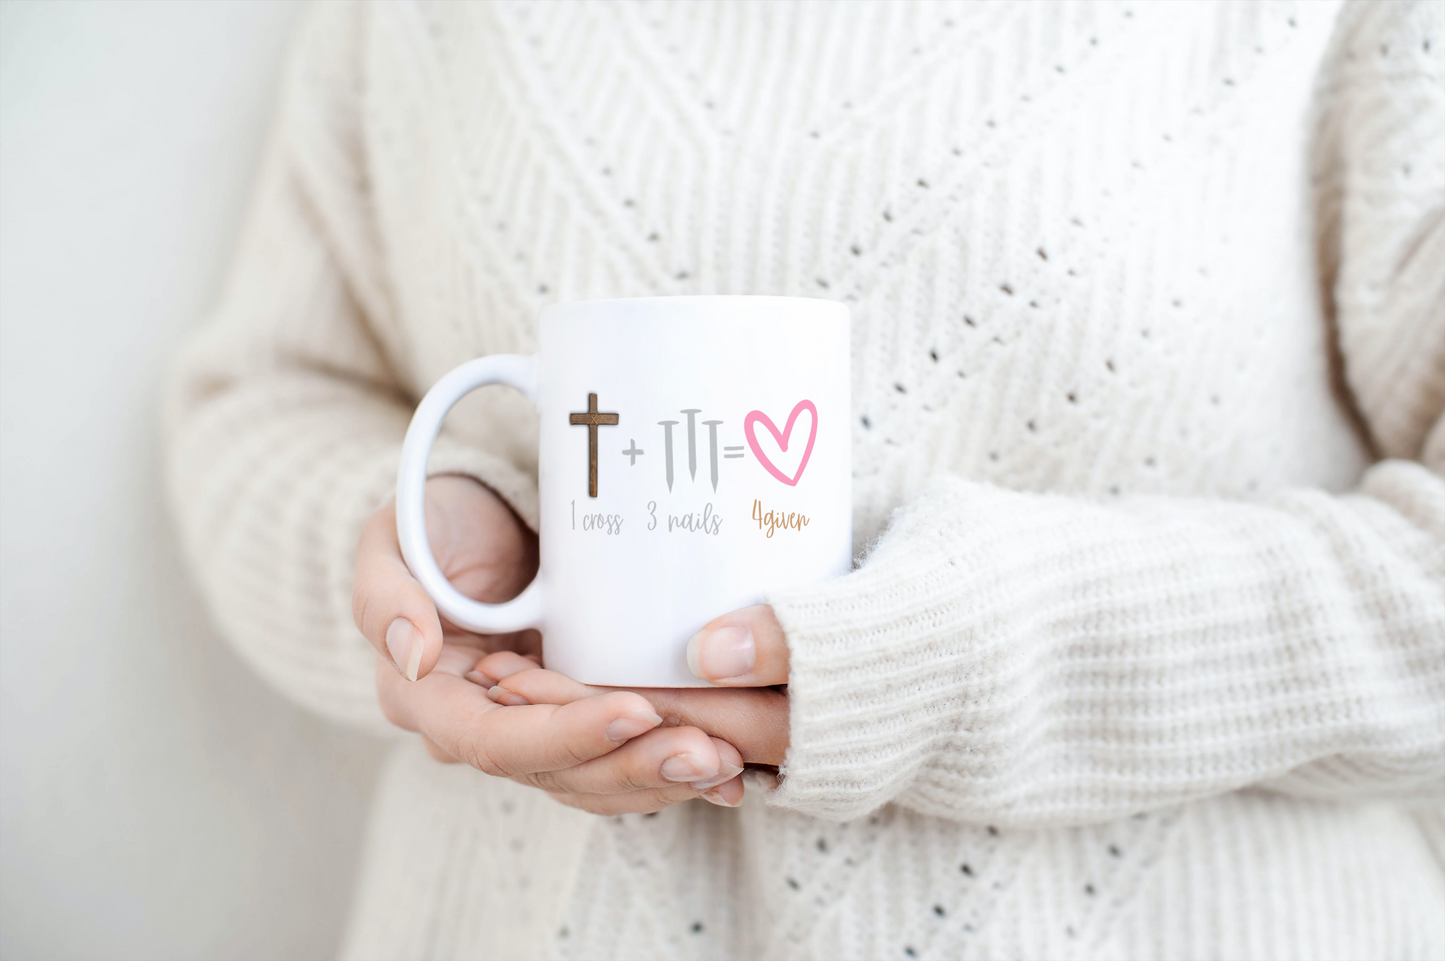 1 Cross + 3 Nails = 4Givens Mug | Faith Mug | Pastor Gift | First Lady Gift